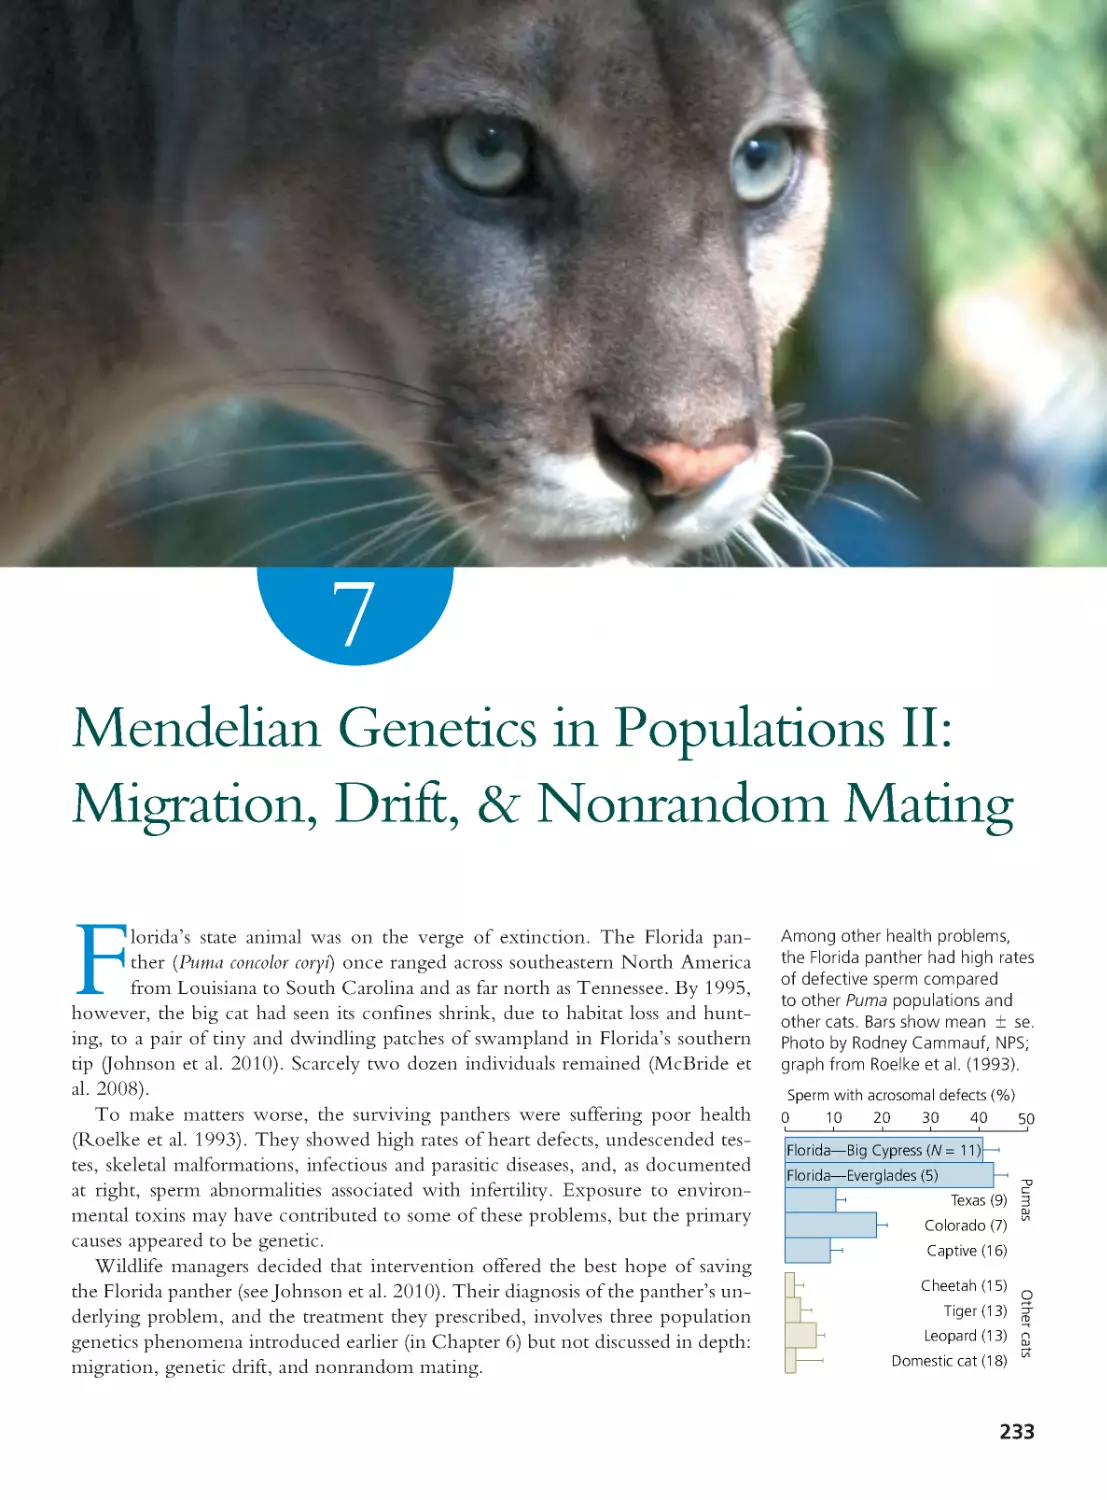 CHAPTER 7 Mendelian Genetics in Populations II: Migration, Drift, and Nonrandom Mating